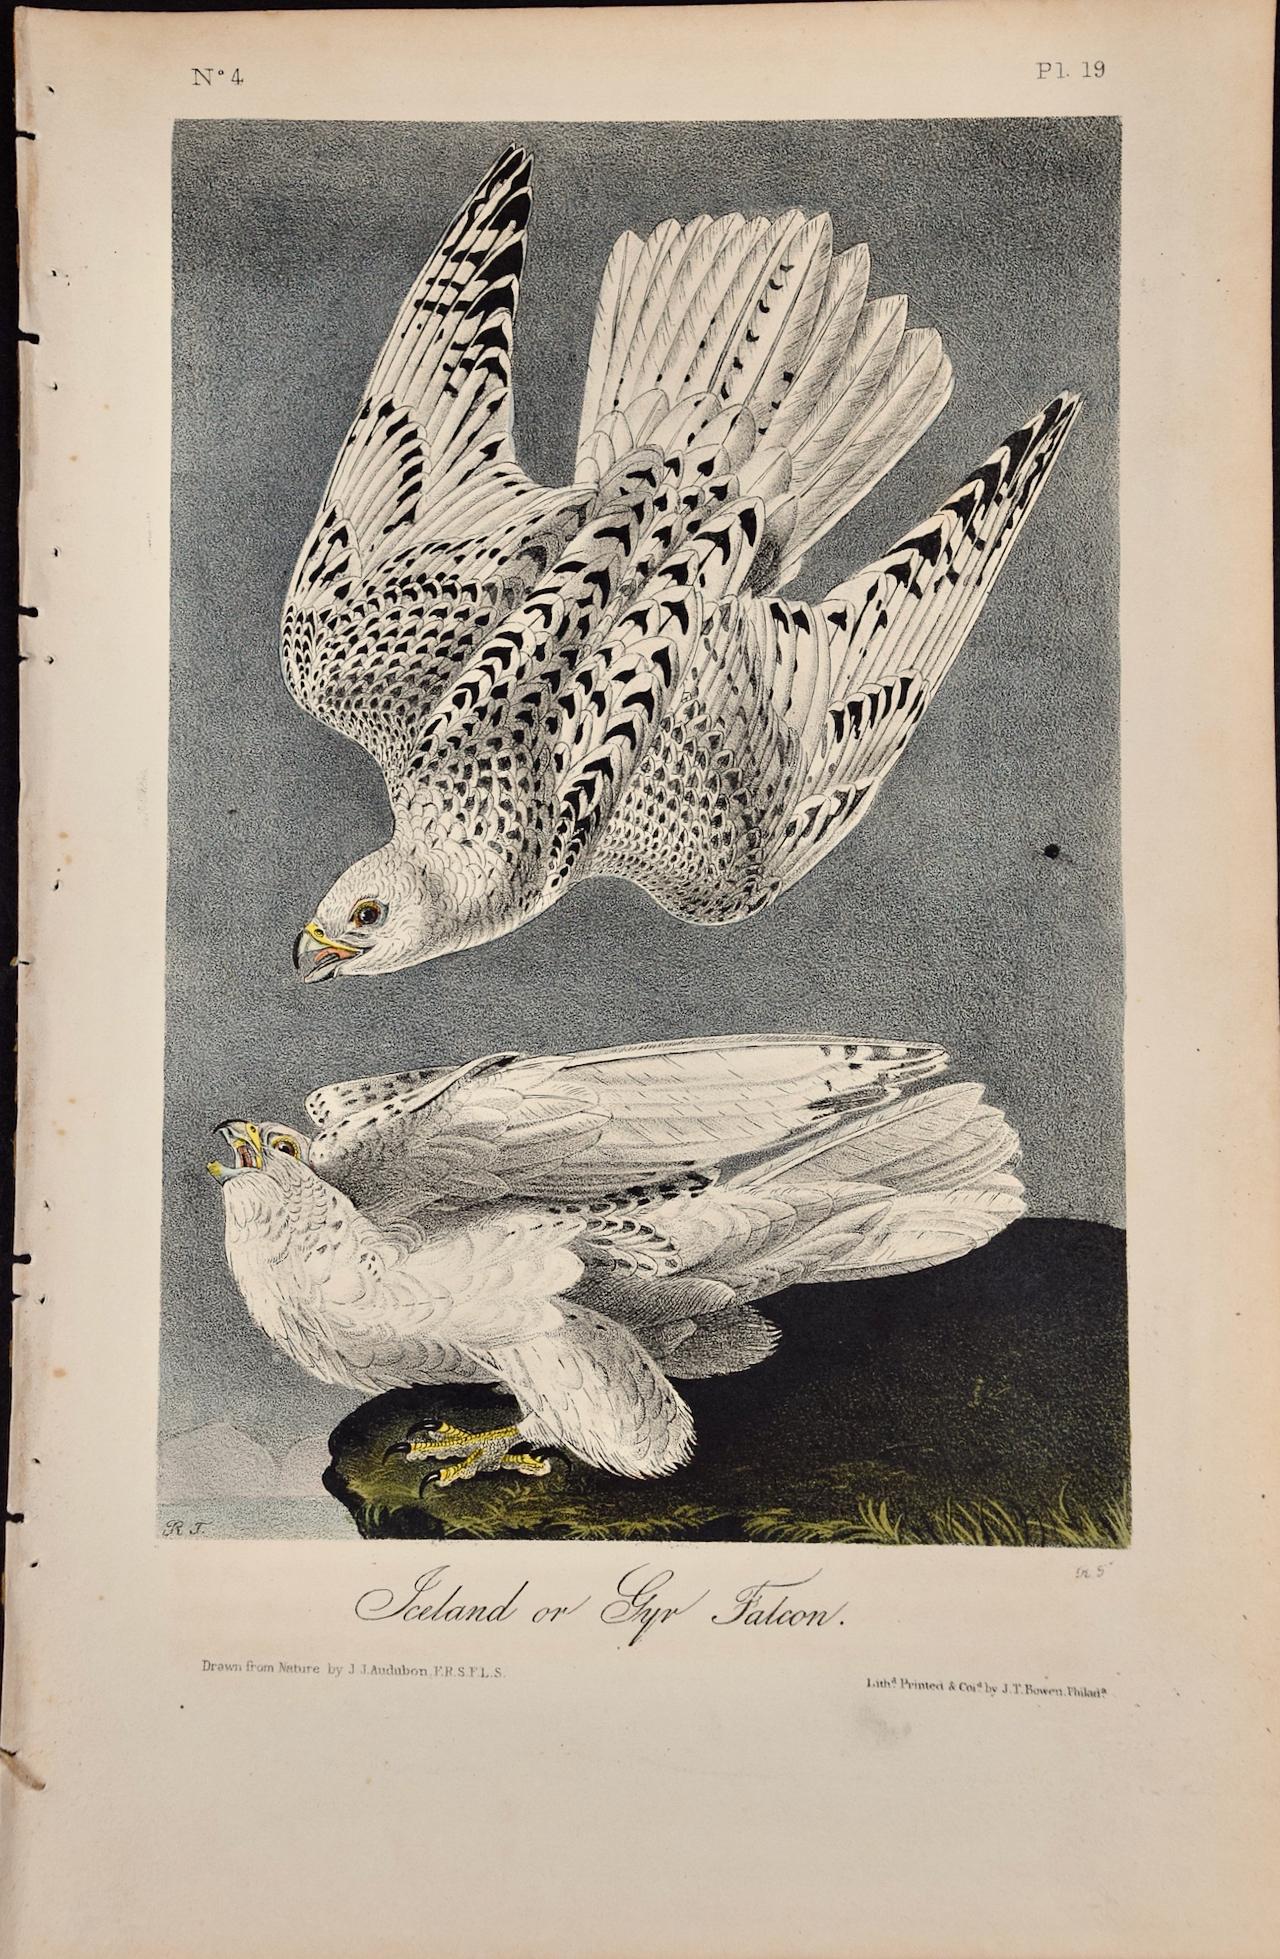 John James Audubon Animal Print - Iceland or Gyr Falcon: An Original 1st Ed. Audubon Hand-colored Bird Lithograph 